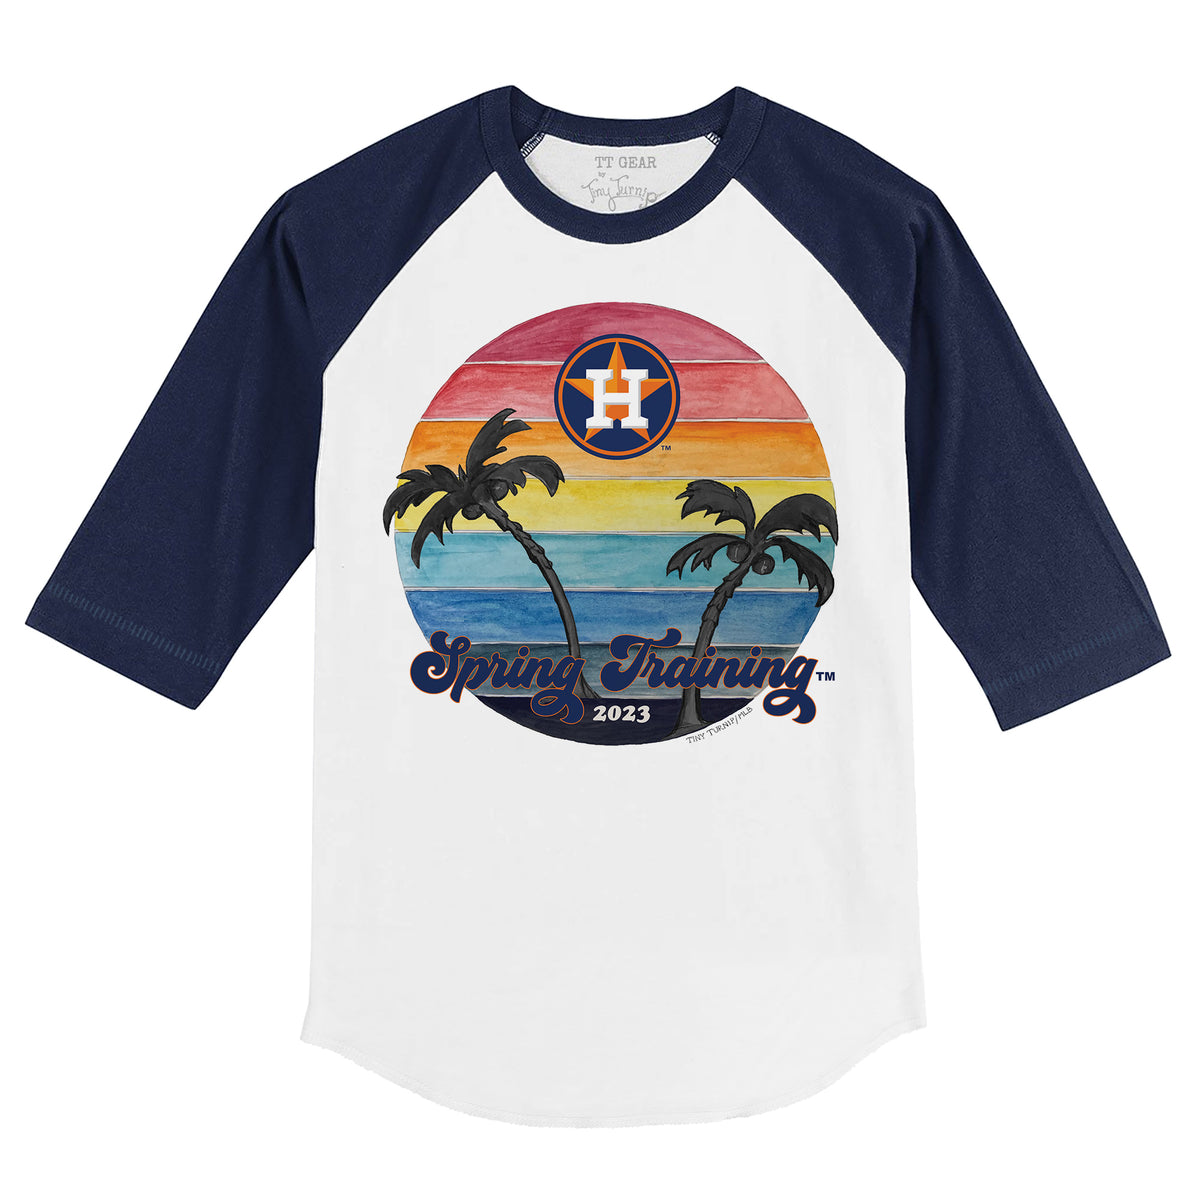 TinyTurnip Houston Astros Stitched Baseball 3/4 Navy Blue Sleeve Raglan Youth Small (6-8)